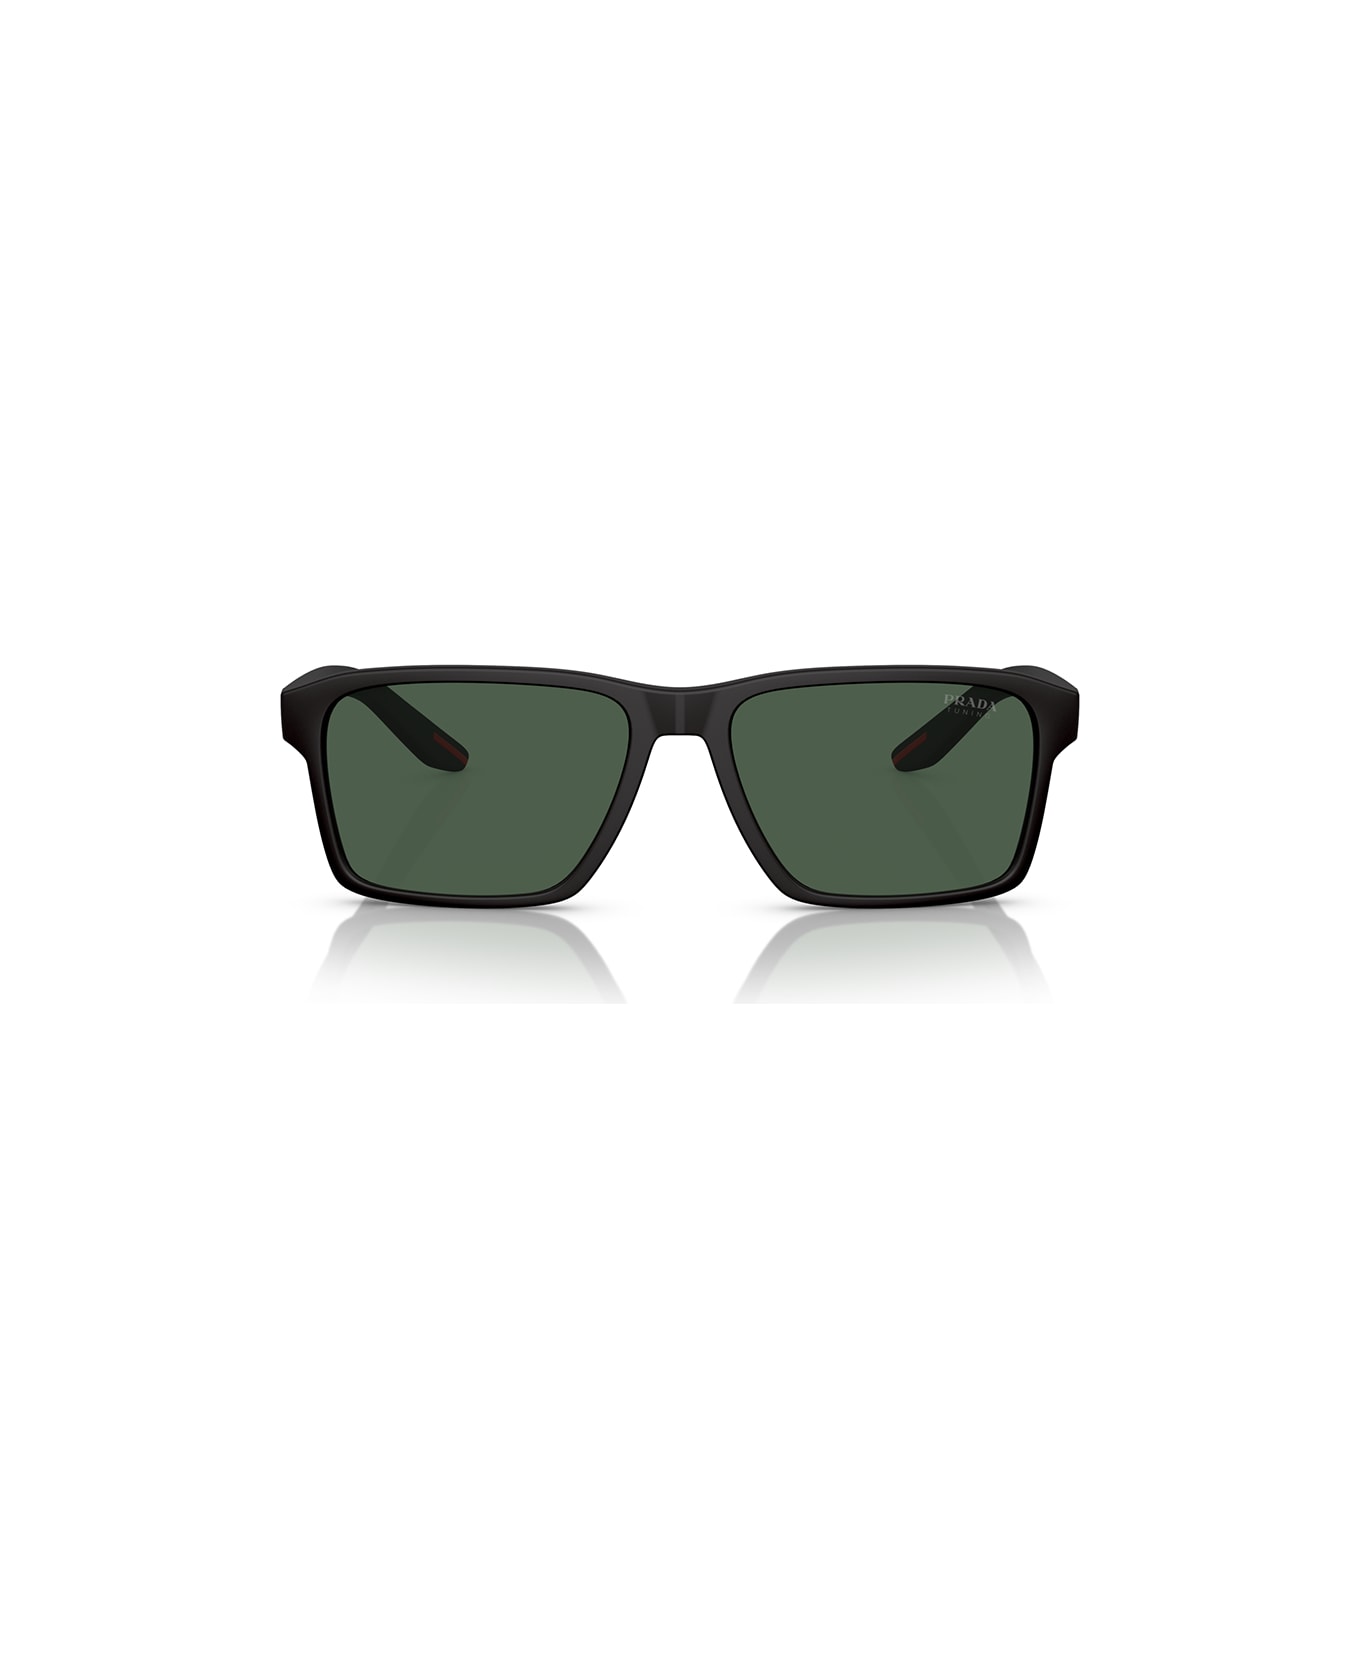 Prada Linea Rossa Sunglasses - Nero/Verde